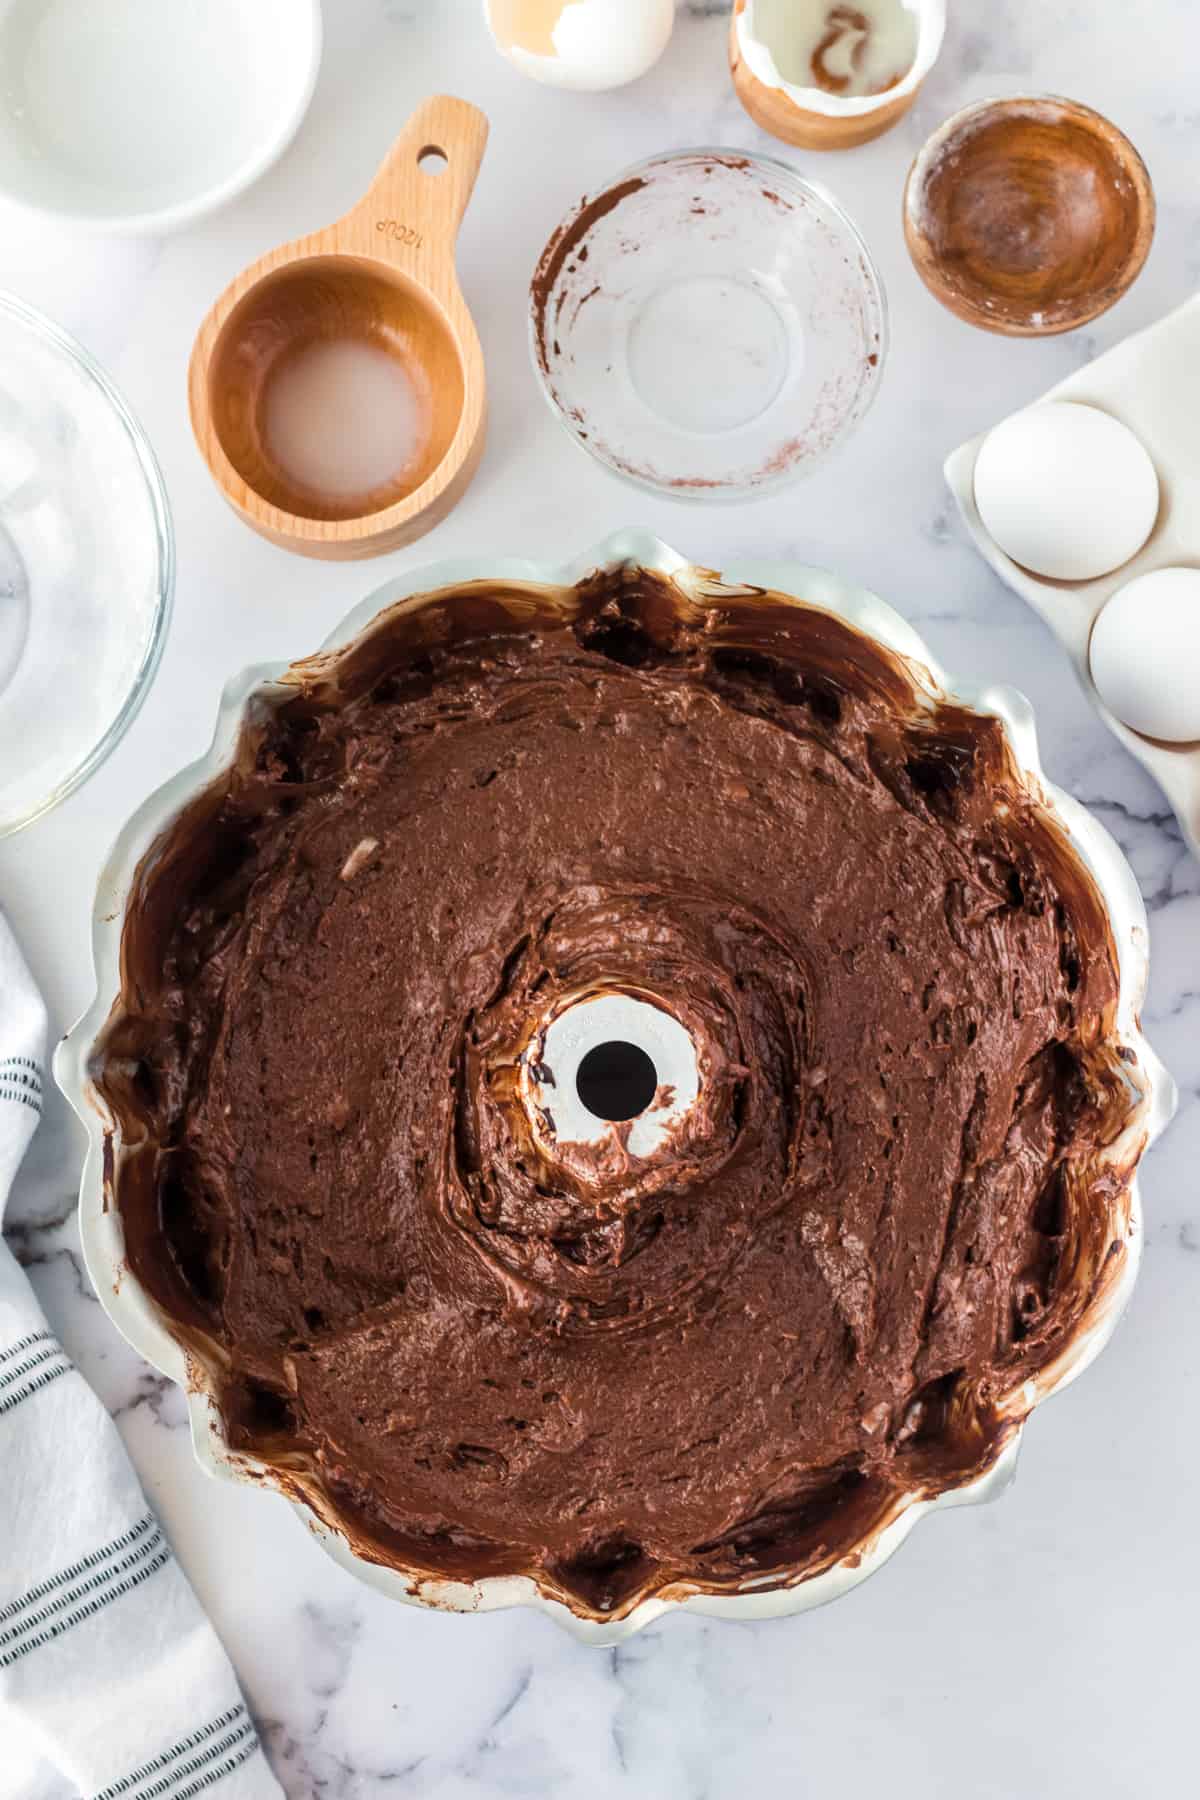 Chocolate coconut cake batter in bundt pan.